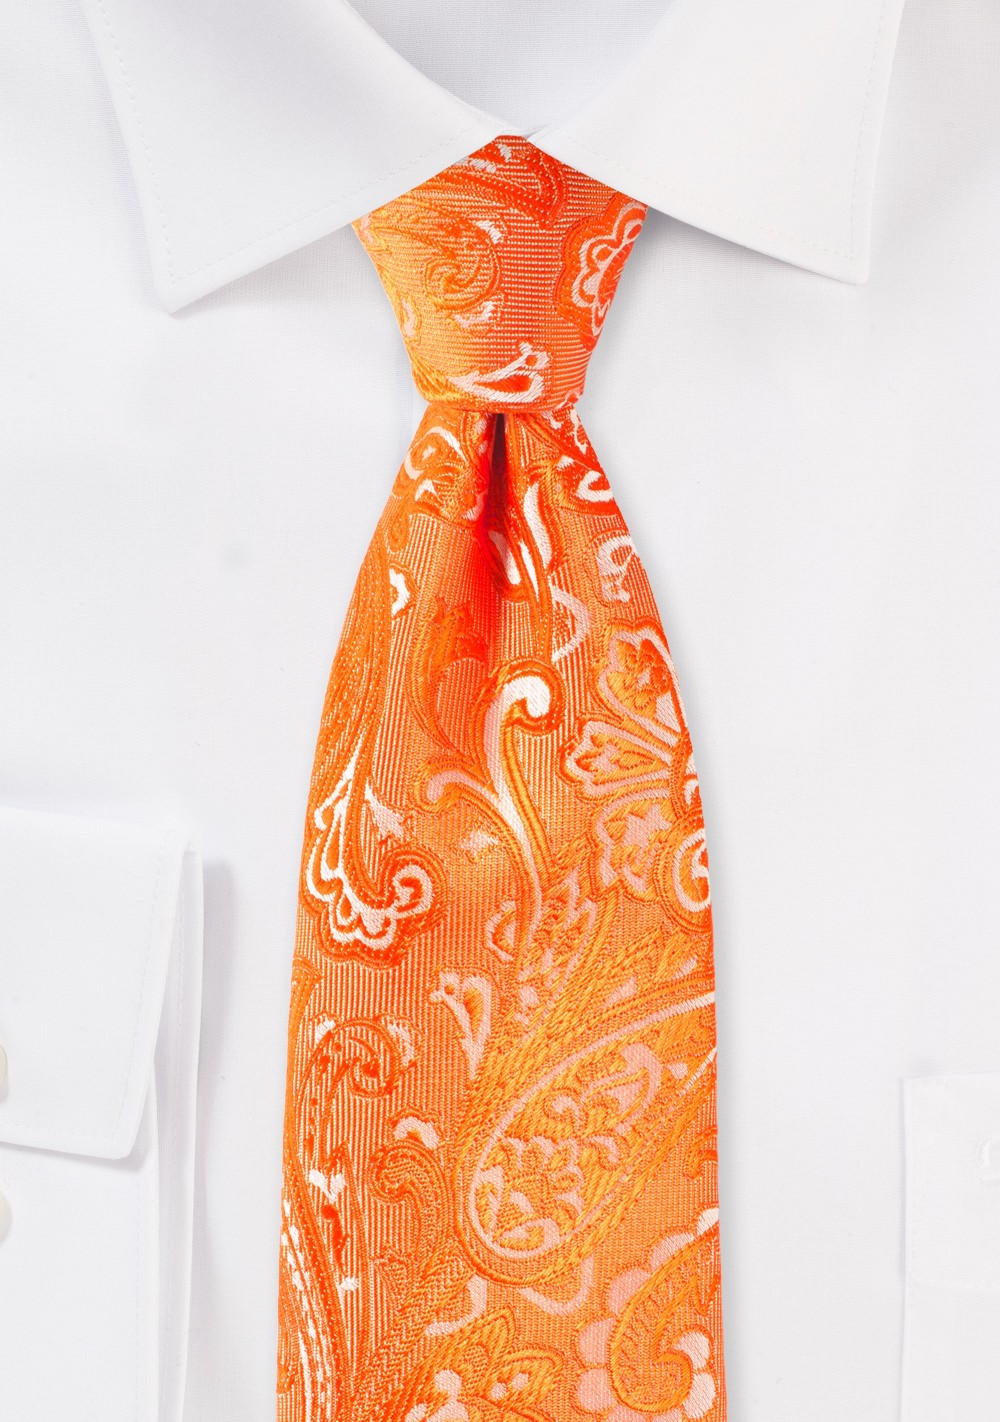 Mandarin Paisley Tie in XL